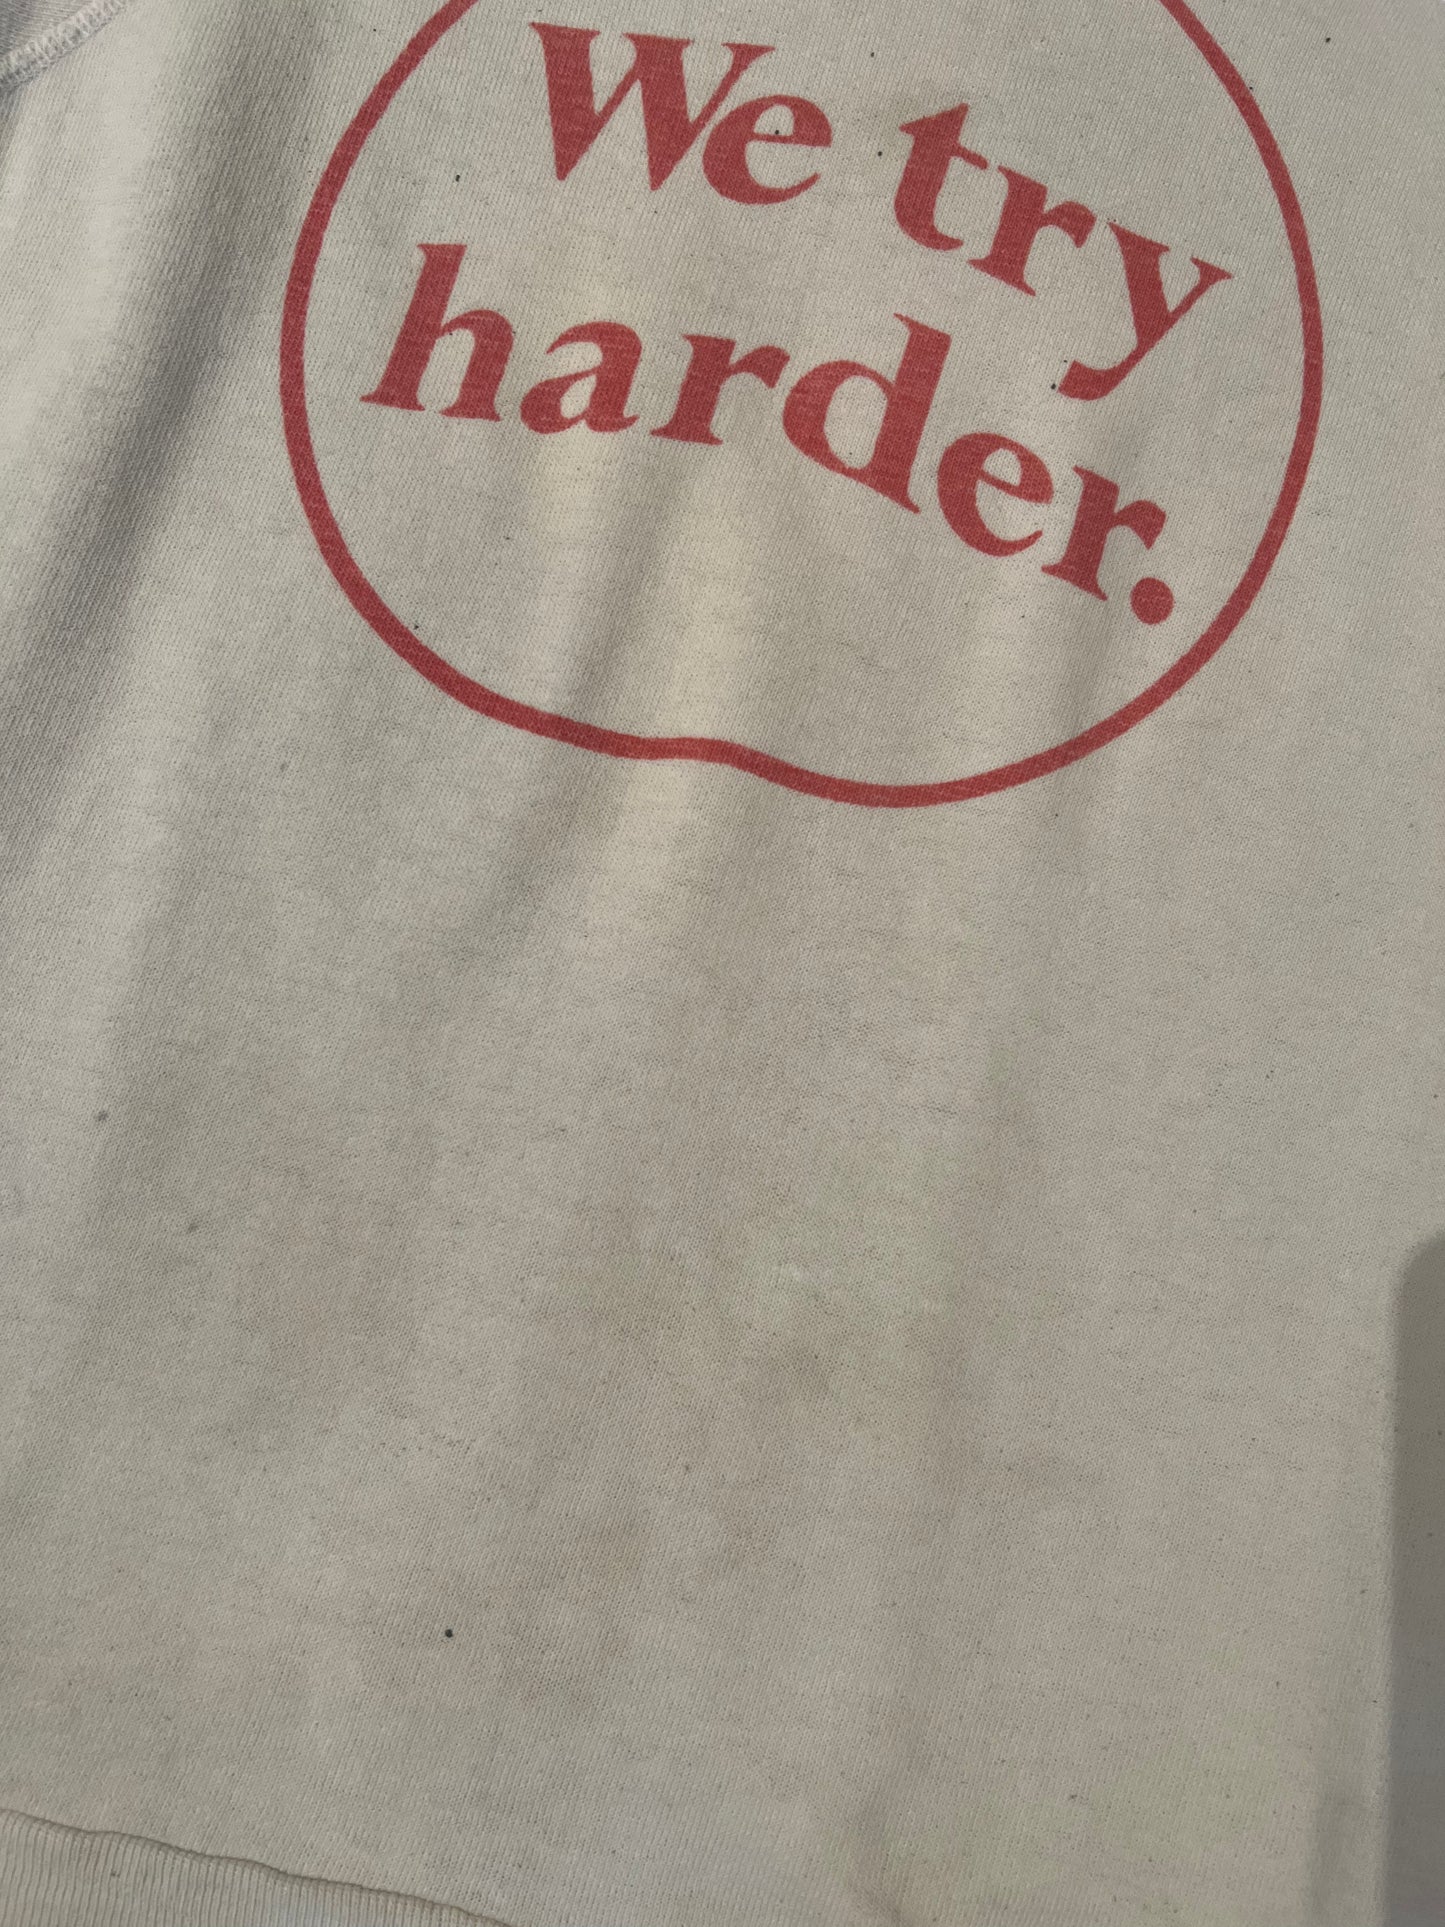 Maverick "We Try Harder" Crew Neck Sweatshirt